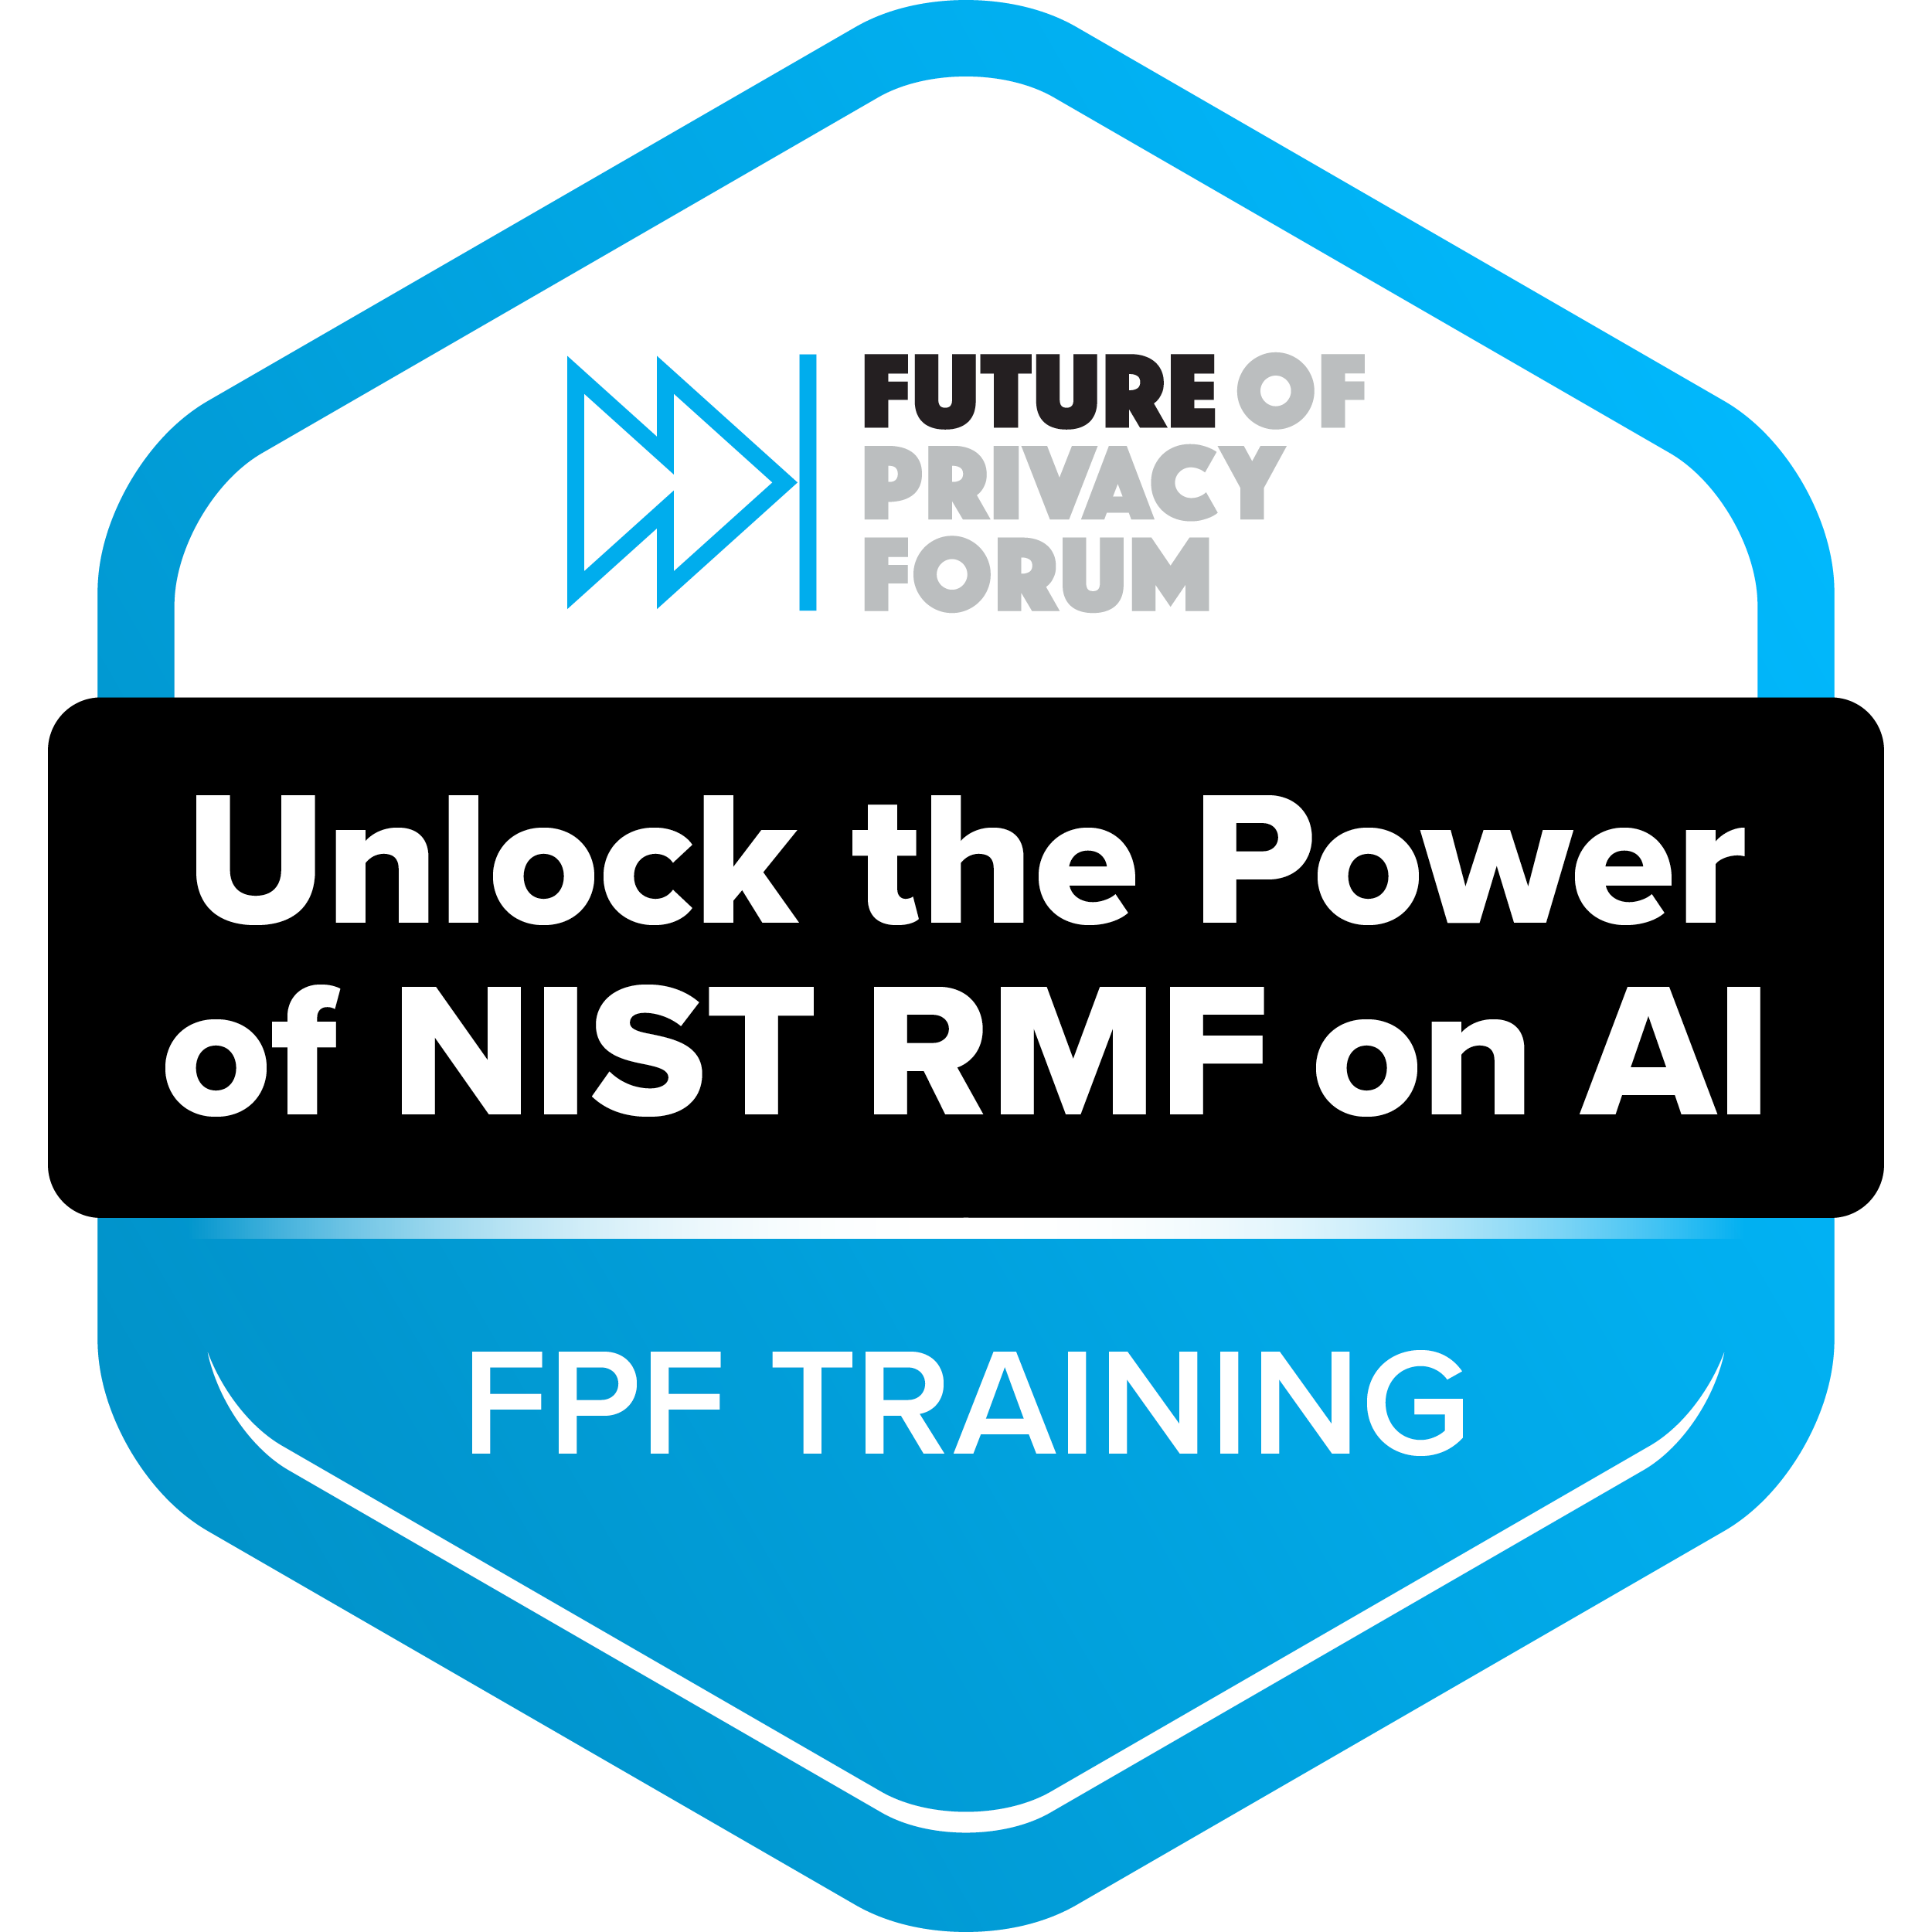 fpf training program badge unlock the power of nist rmf on ai